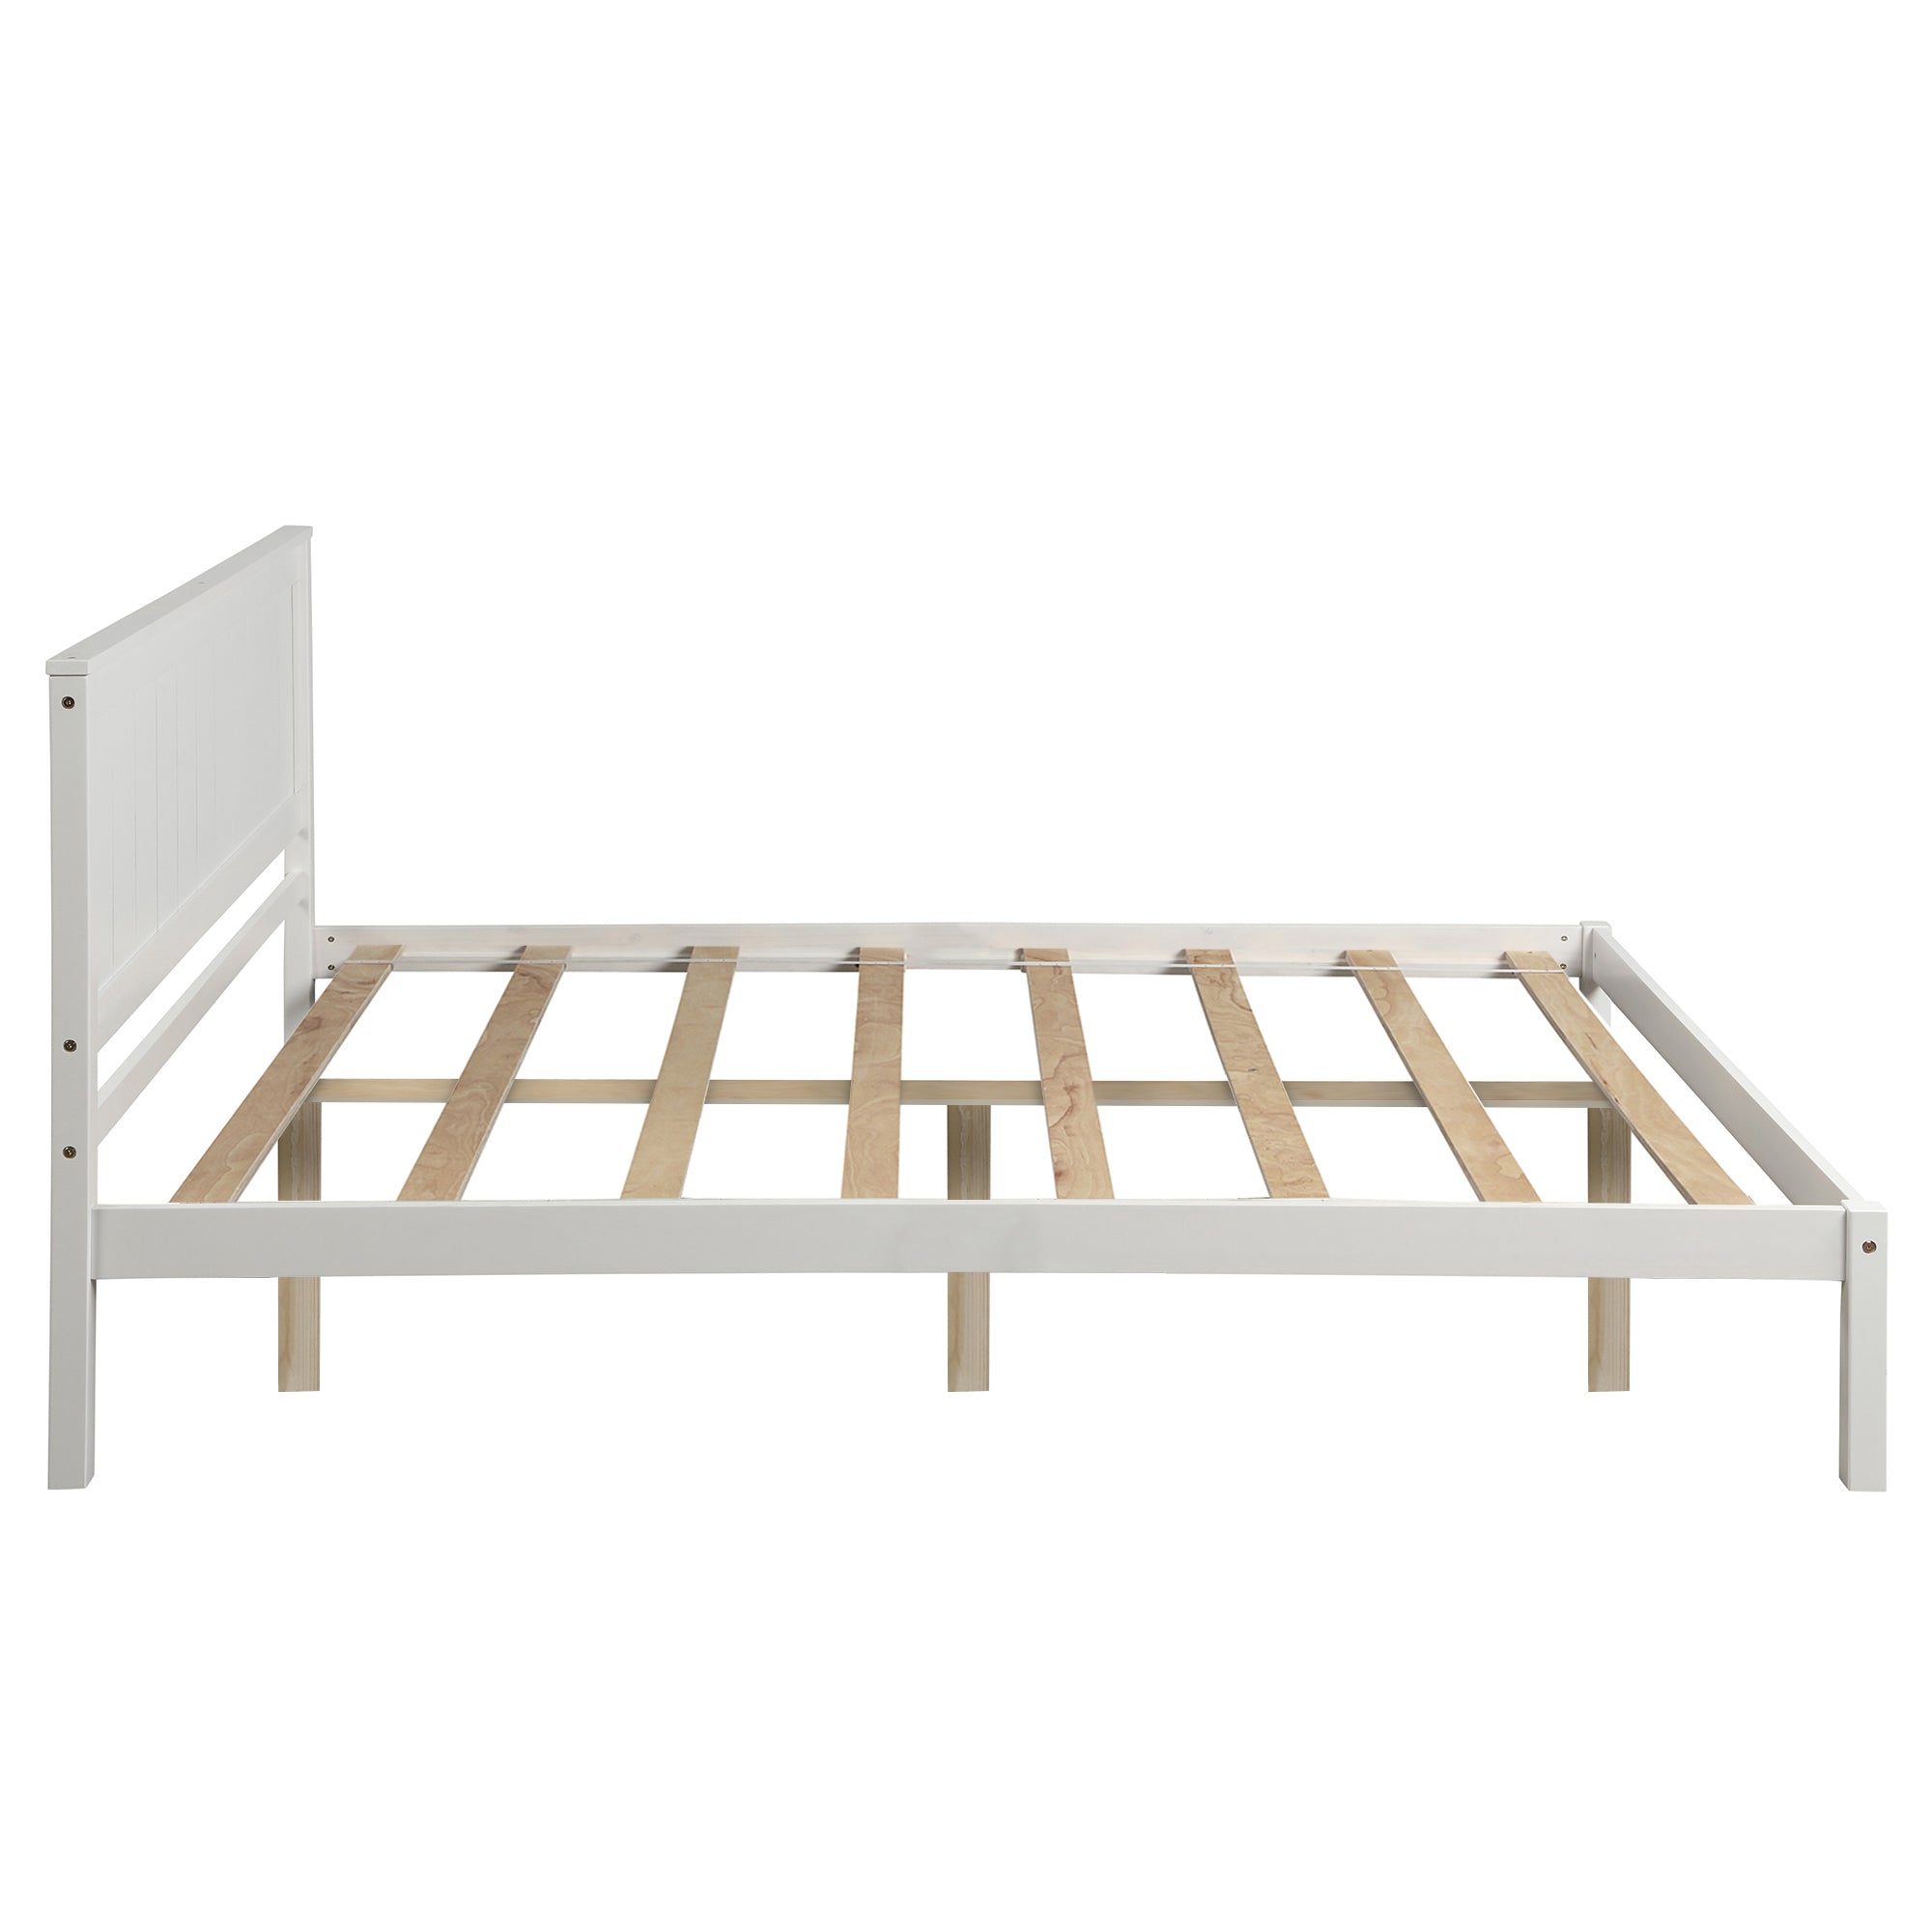 Pine Wood Platform Bed Frame with Headboard and Wood Slats by: Alabama Beds